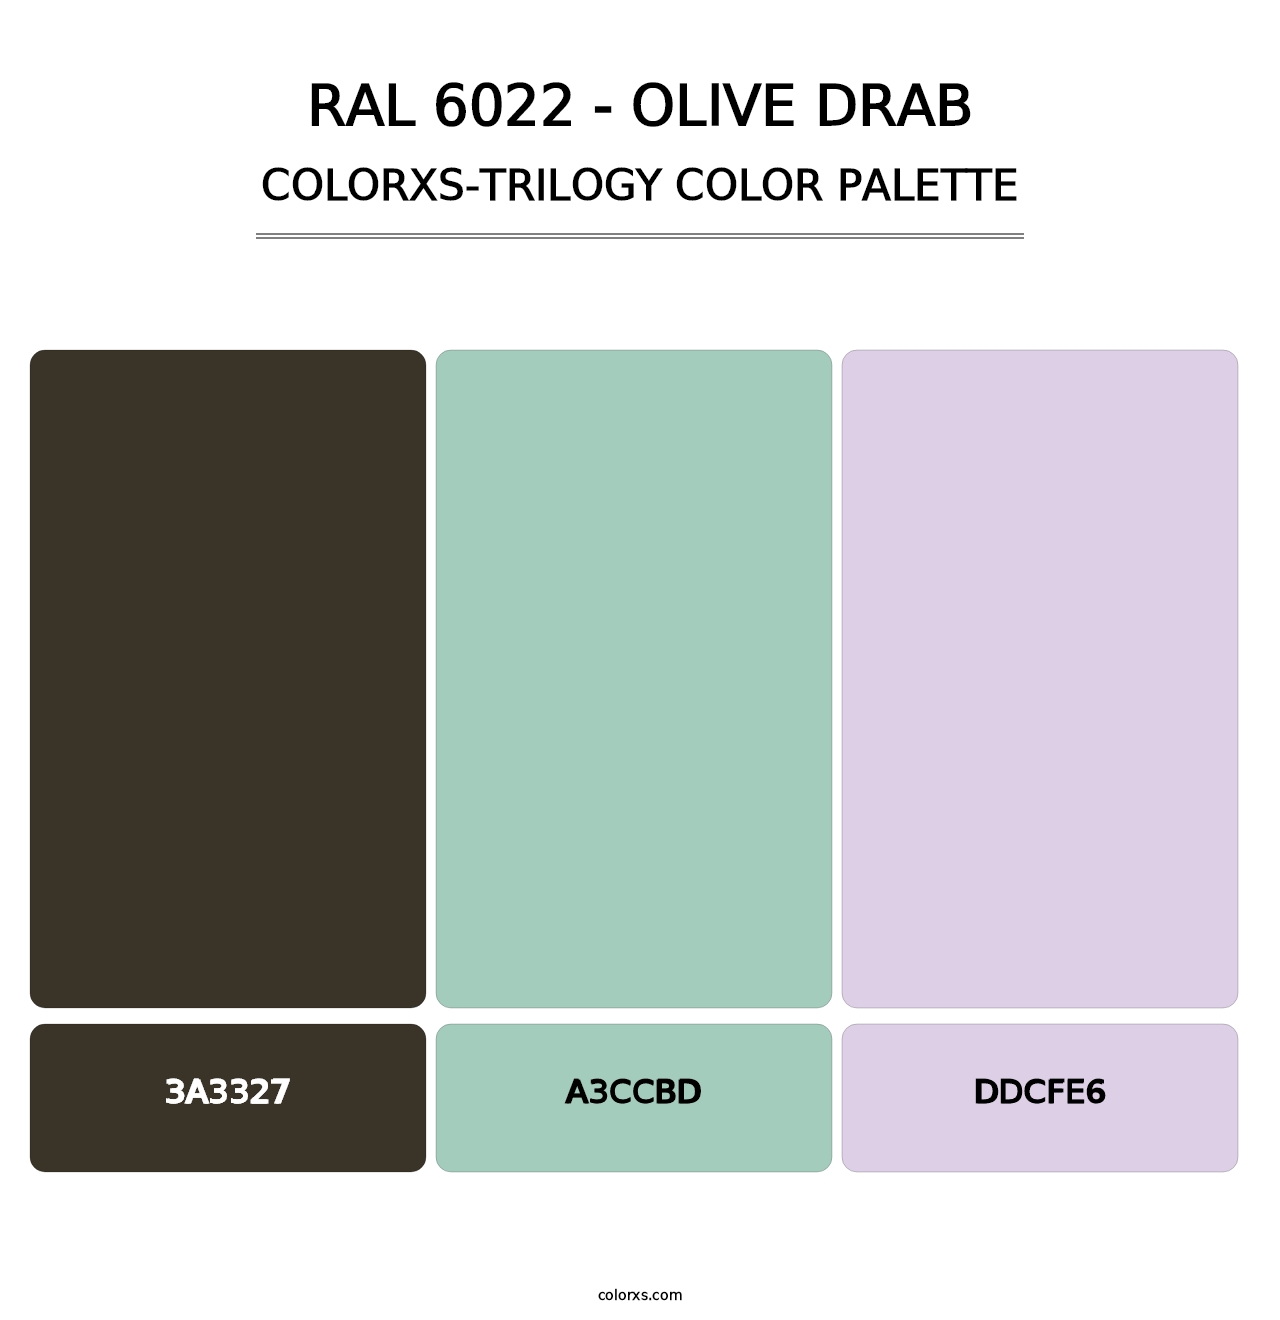 RAL 6022 - Olive Drab - Colorxs Trilogy Palette